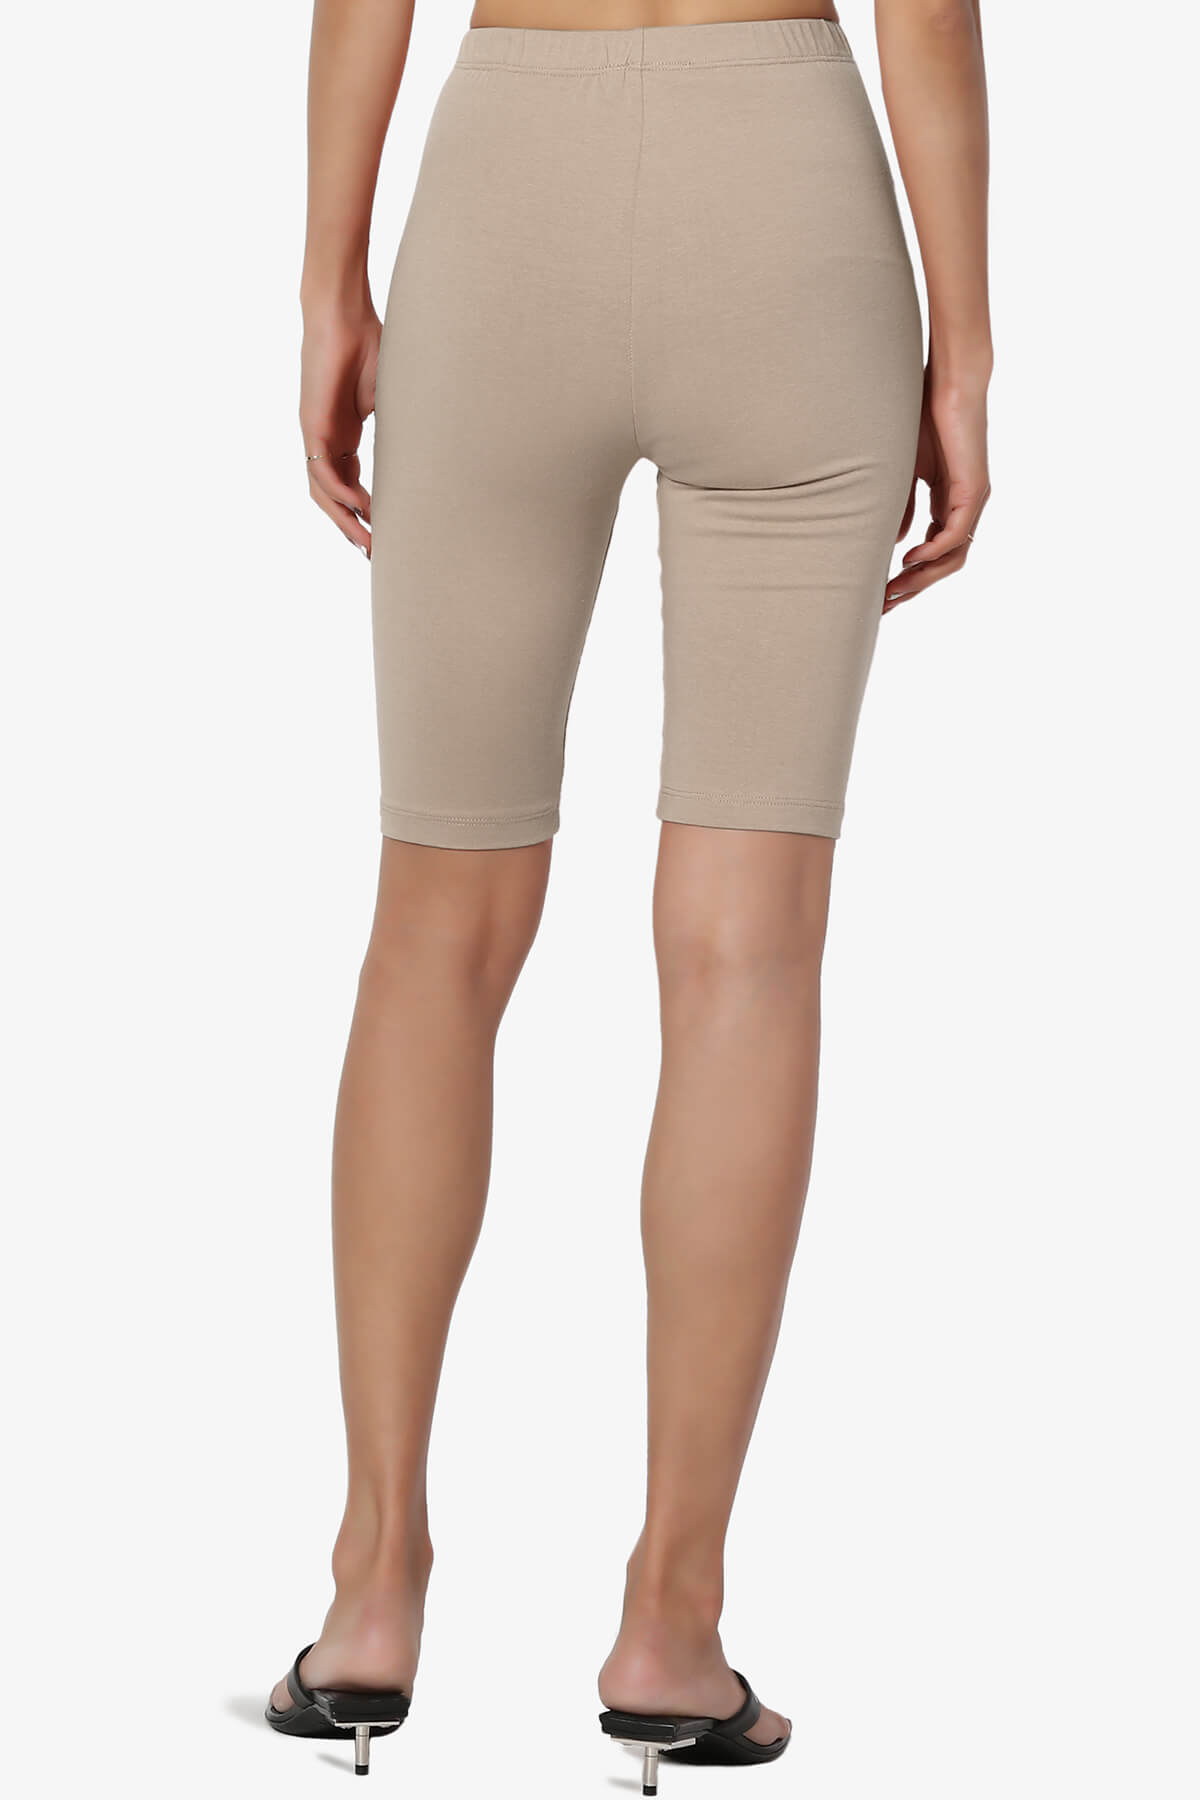 HUE Women's Knee Length Cotton Capri, Black, Large at Amazon Women's  Clothing store